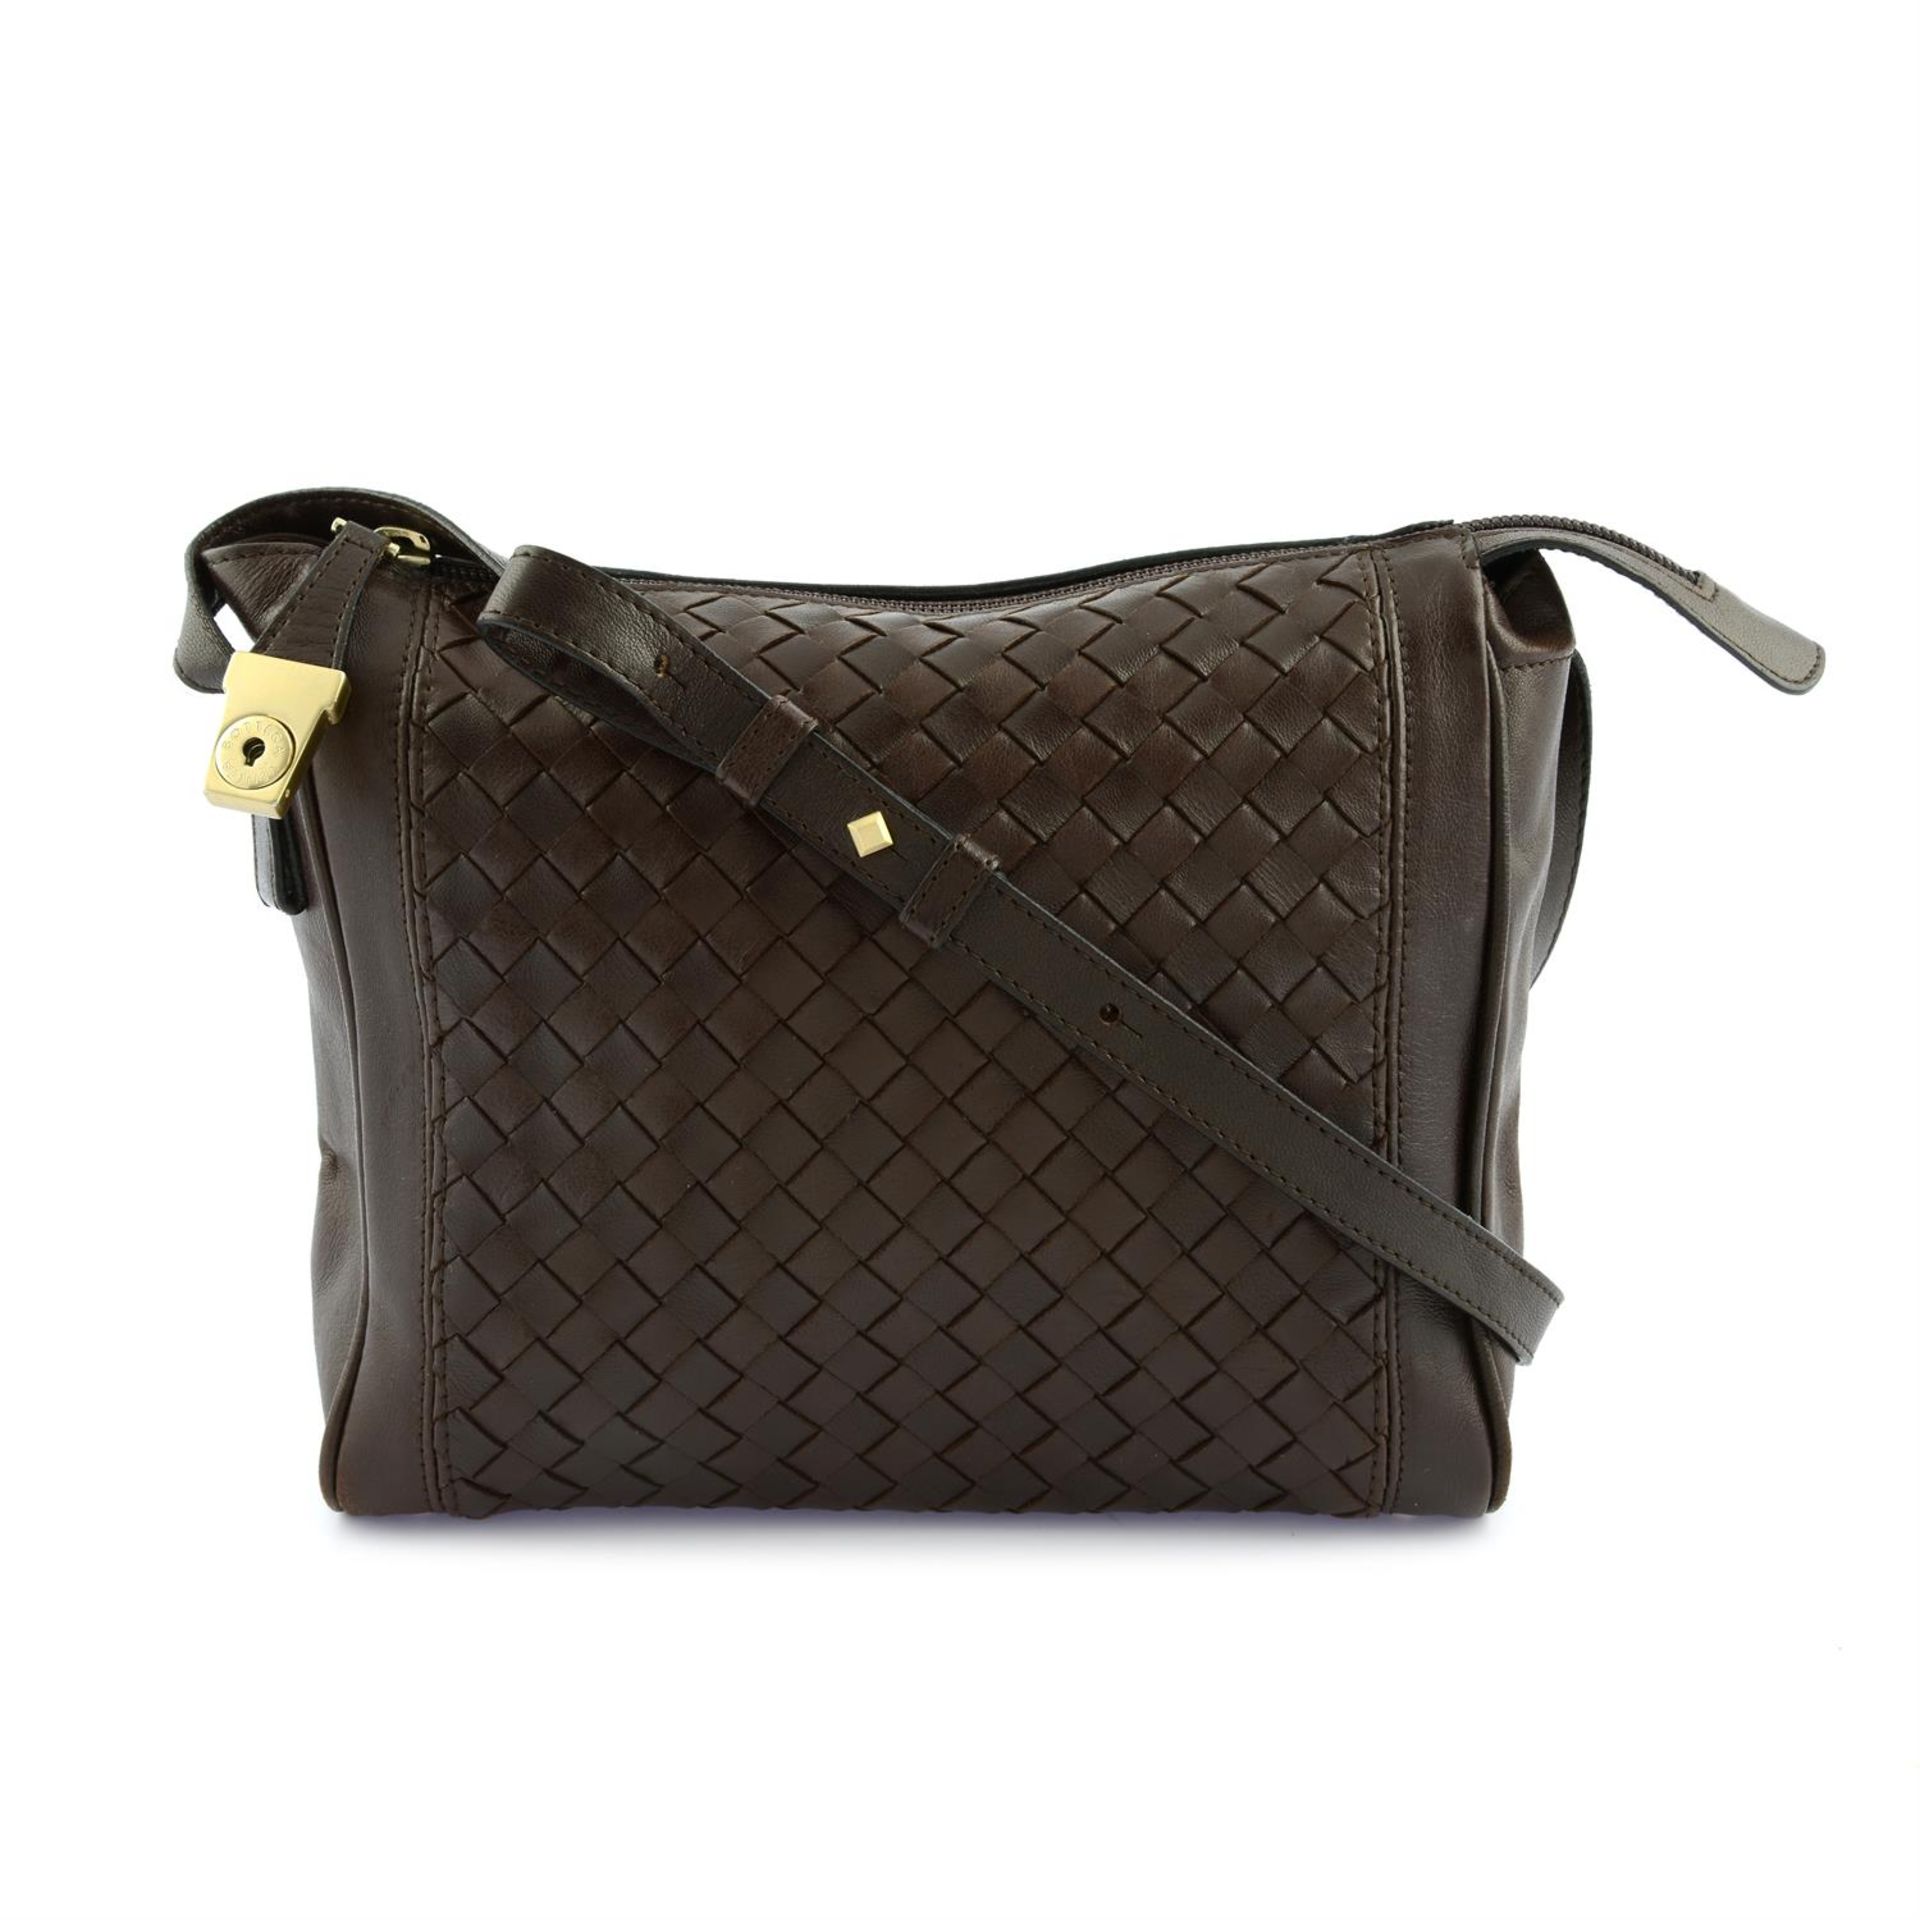 BOTTEGA VENETA - a brown leather crossbody handbag.